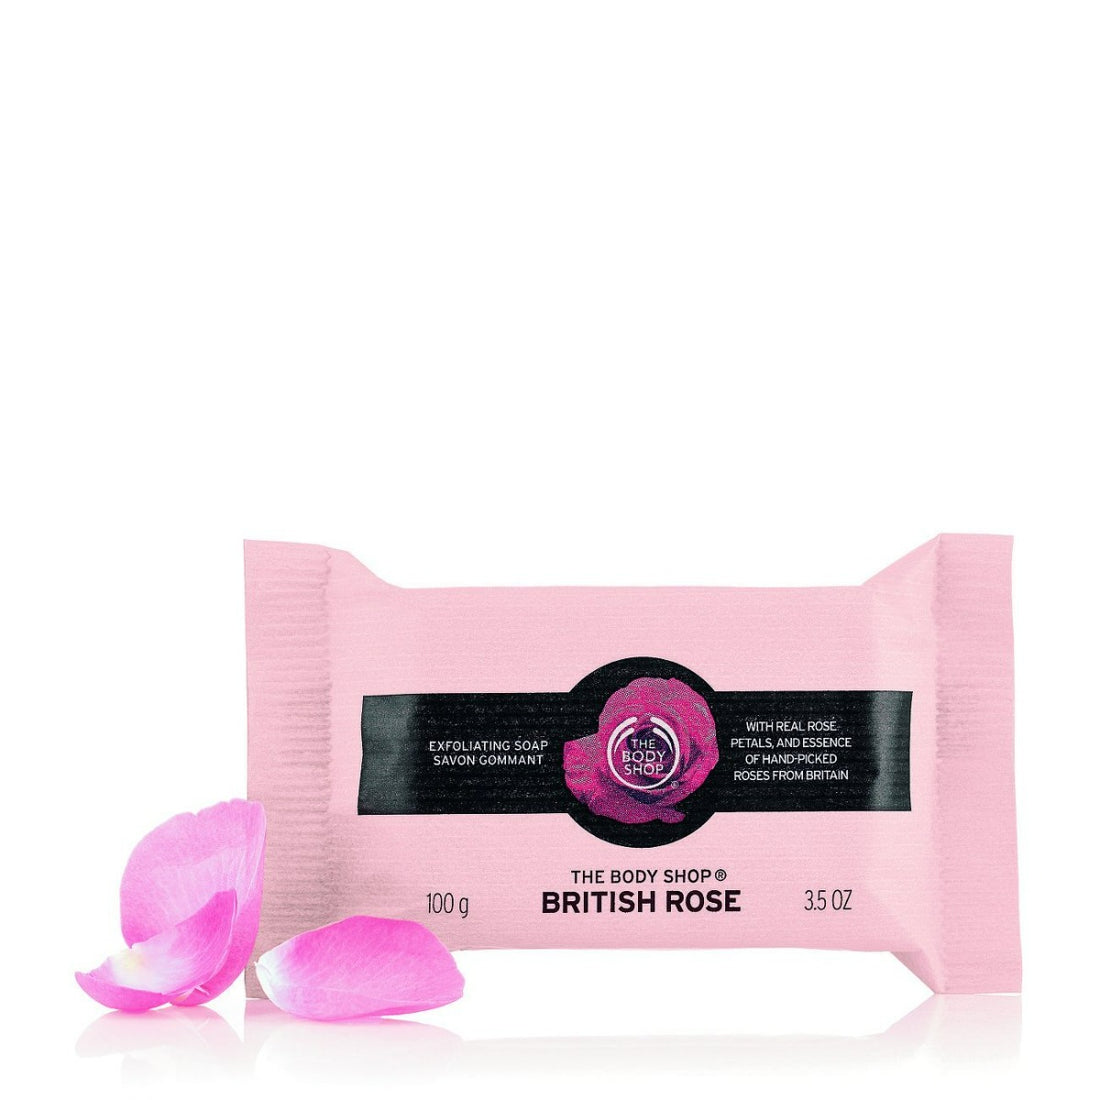 The Body Shop British Rose Exfoliating Soap Bar (100g)